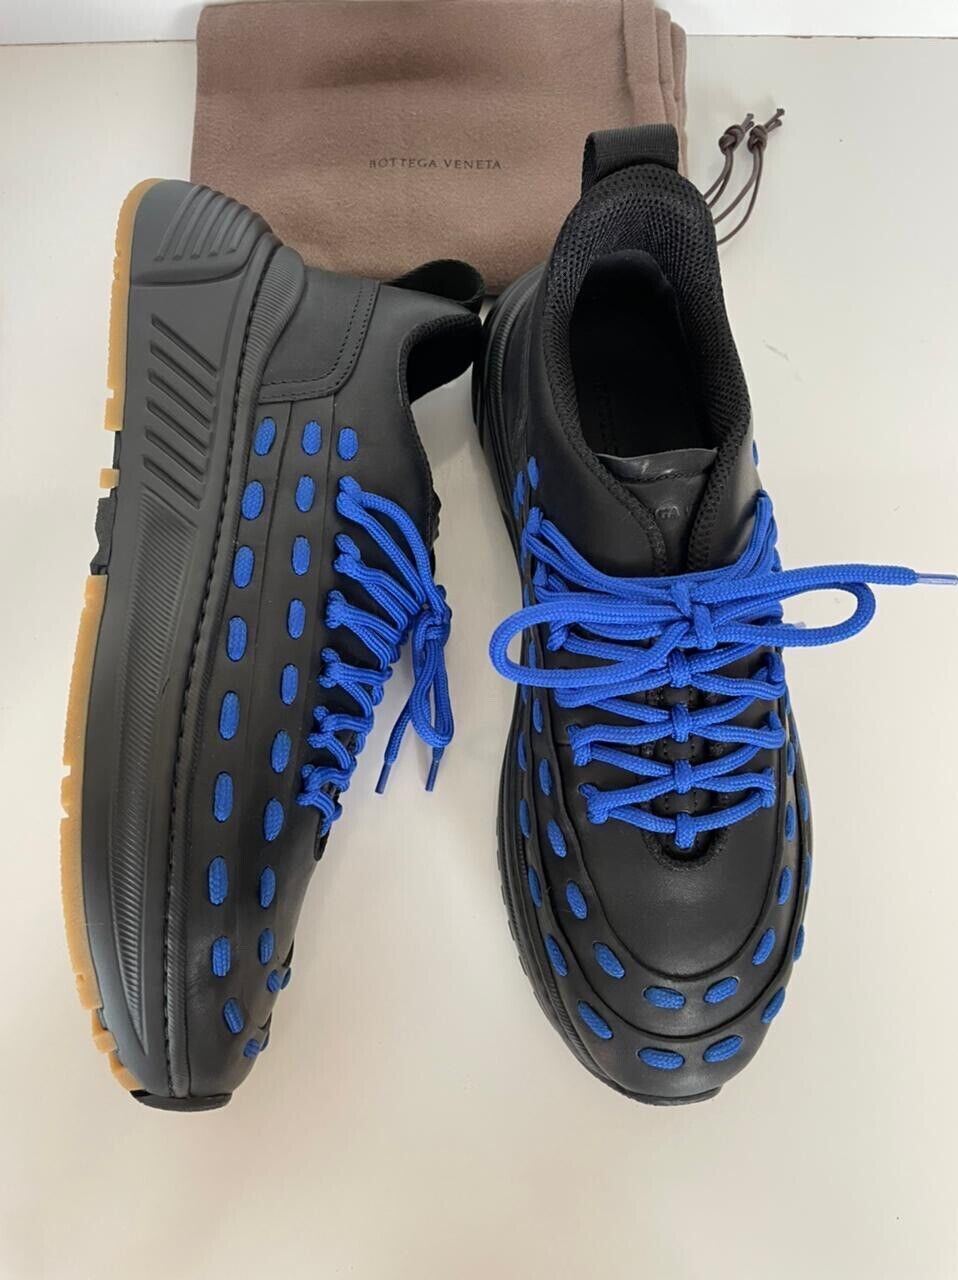 NIB $950 Bottega Veneta Mens Leather Black/Blue Sneakers 7 US (40) 578305 1014